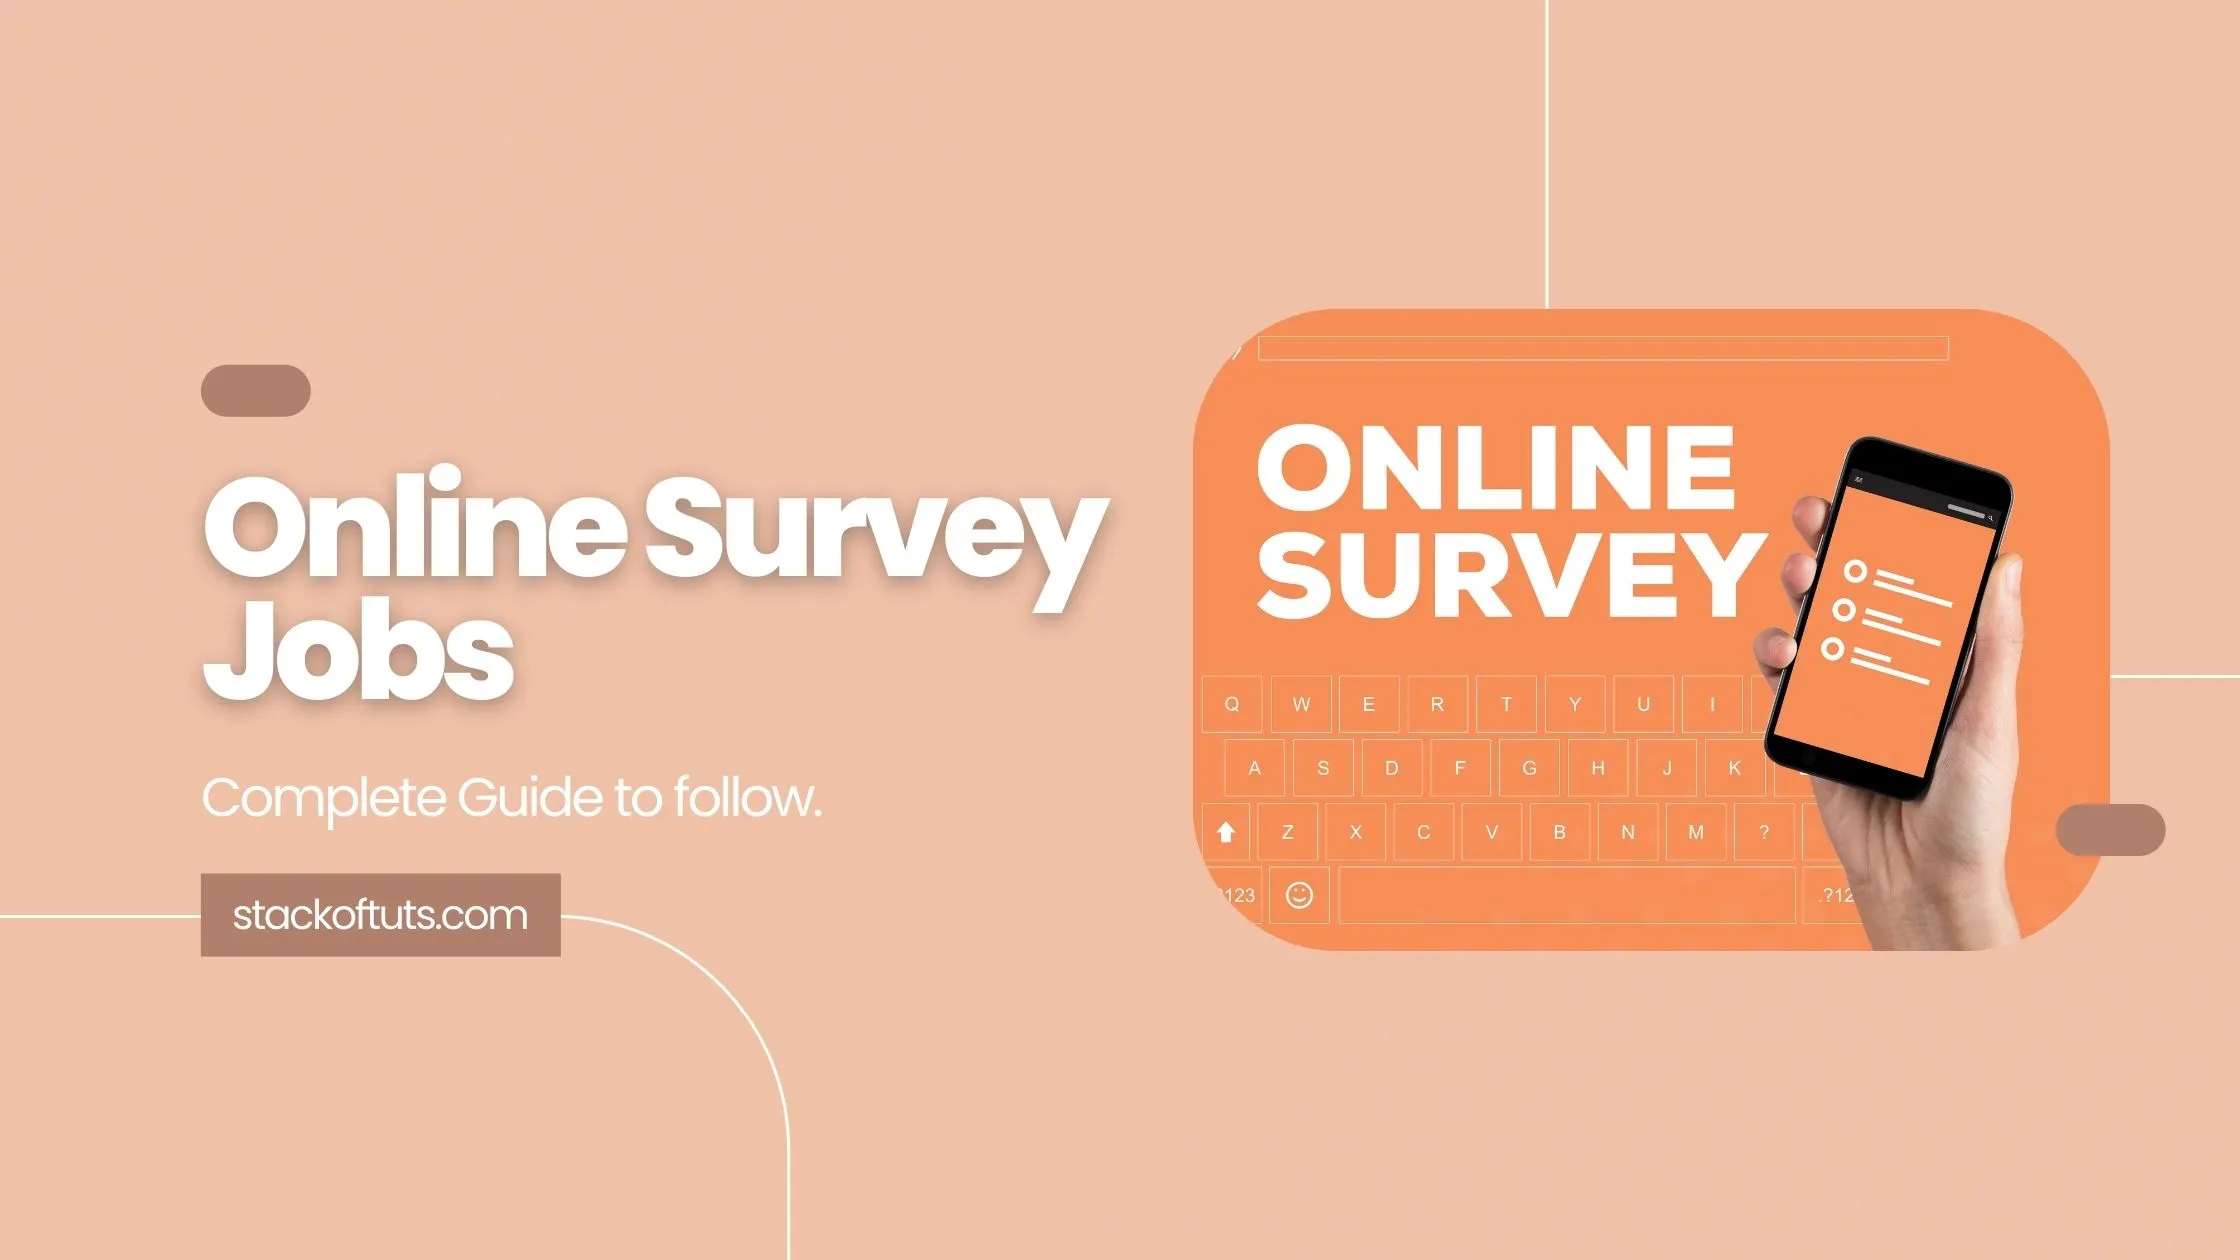 Online-survey-jobs-in-Pakistan